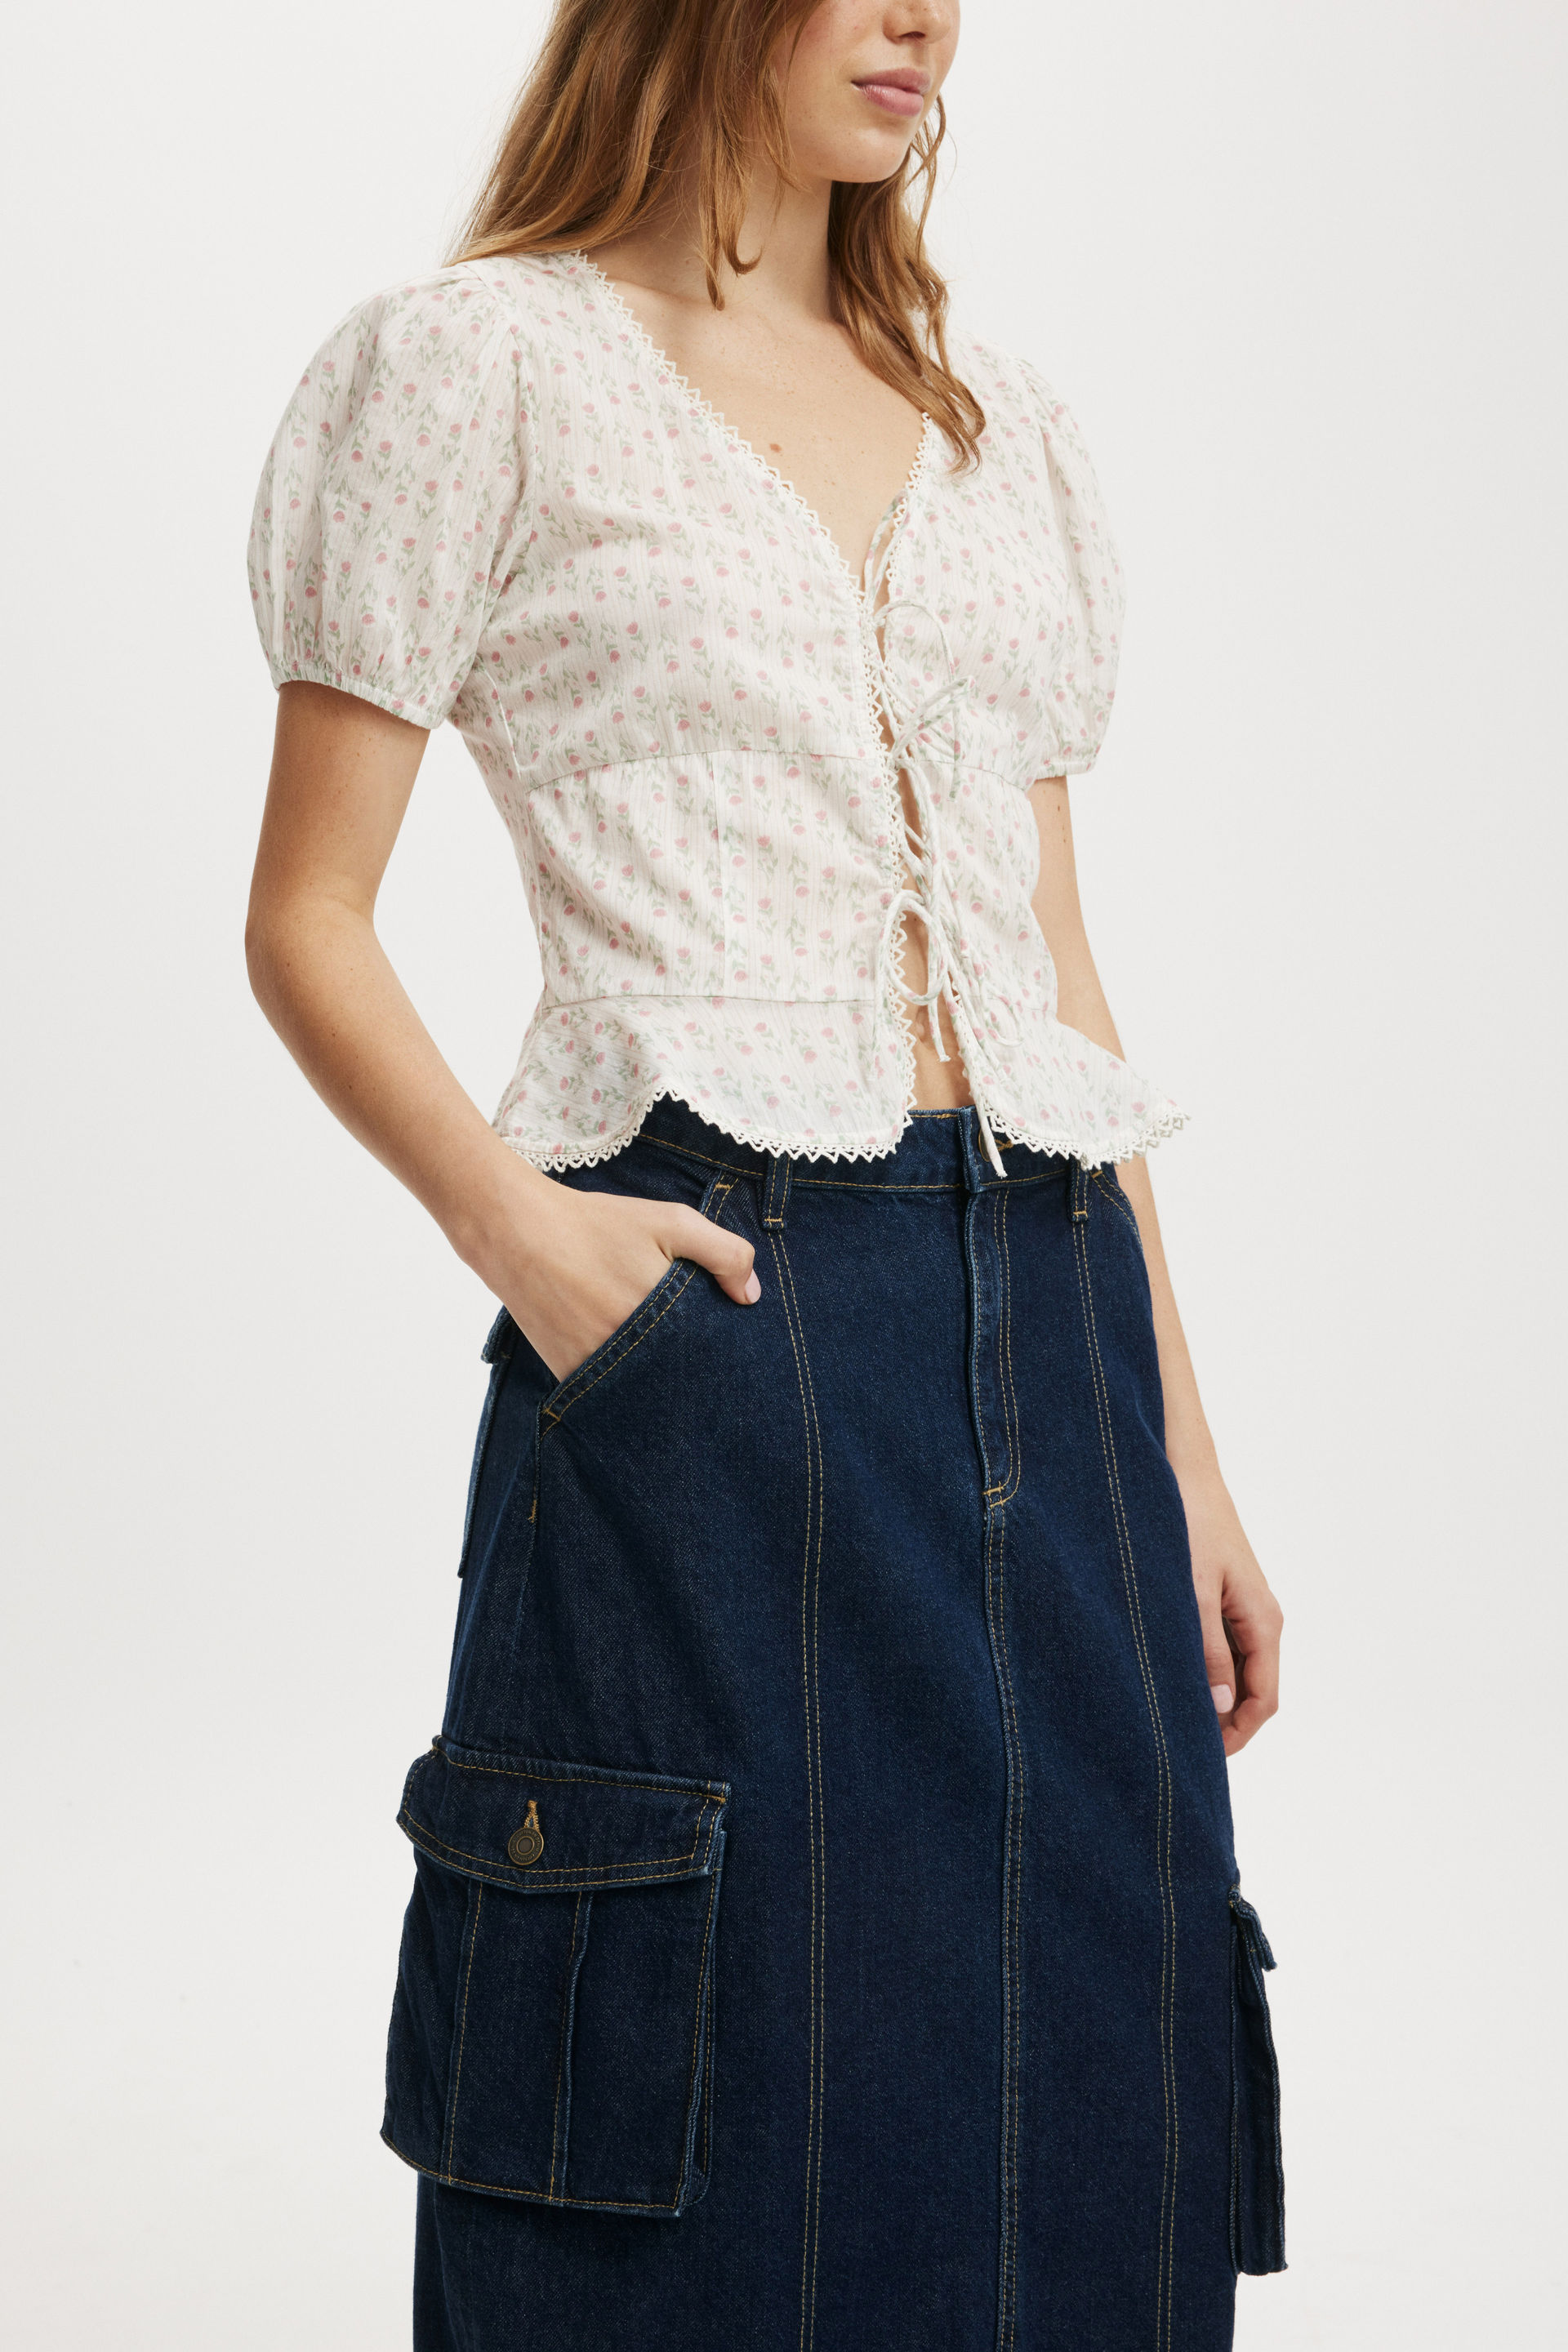 Denim skirt from CottonOn, Shirt from Foschini